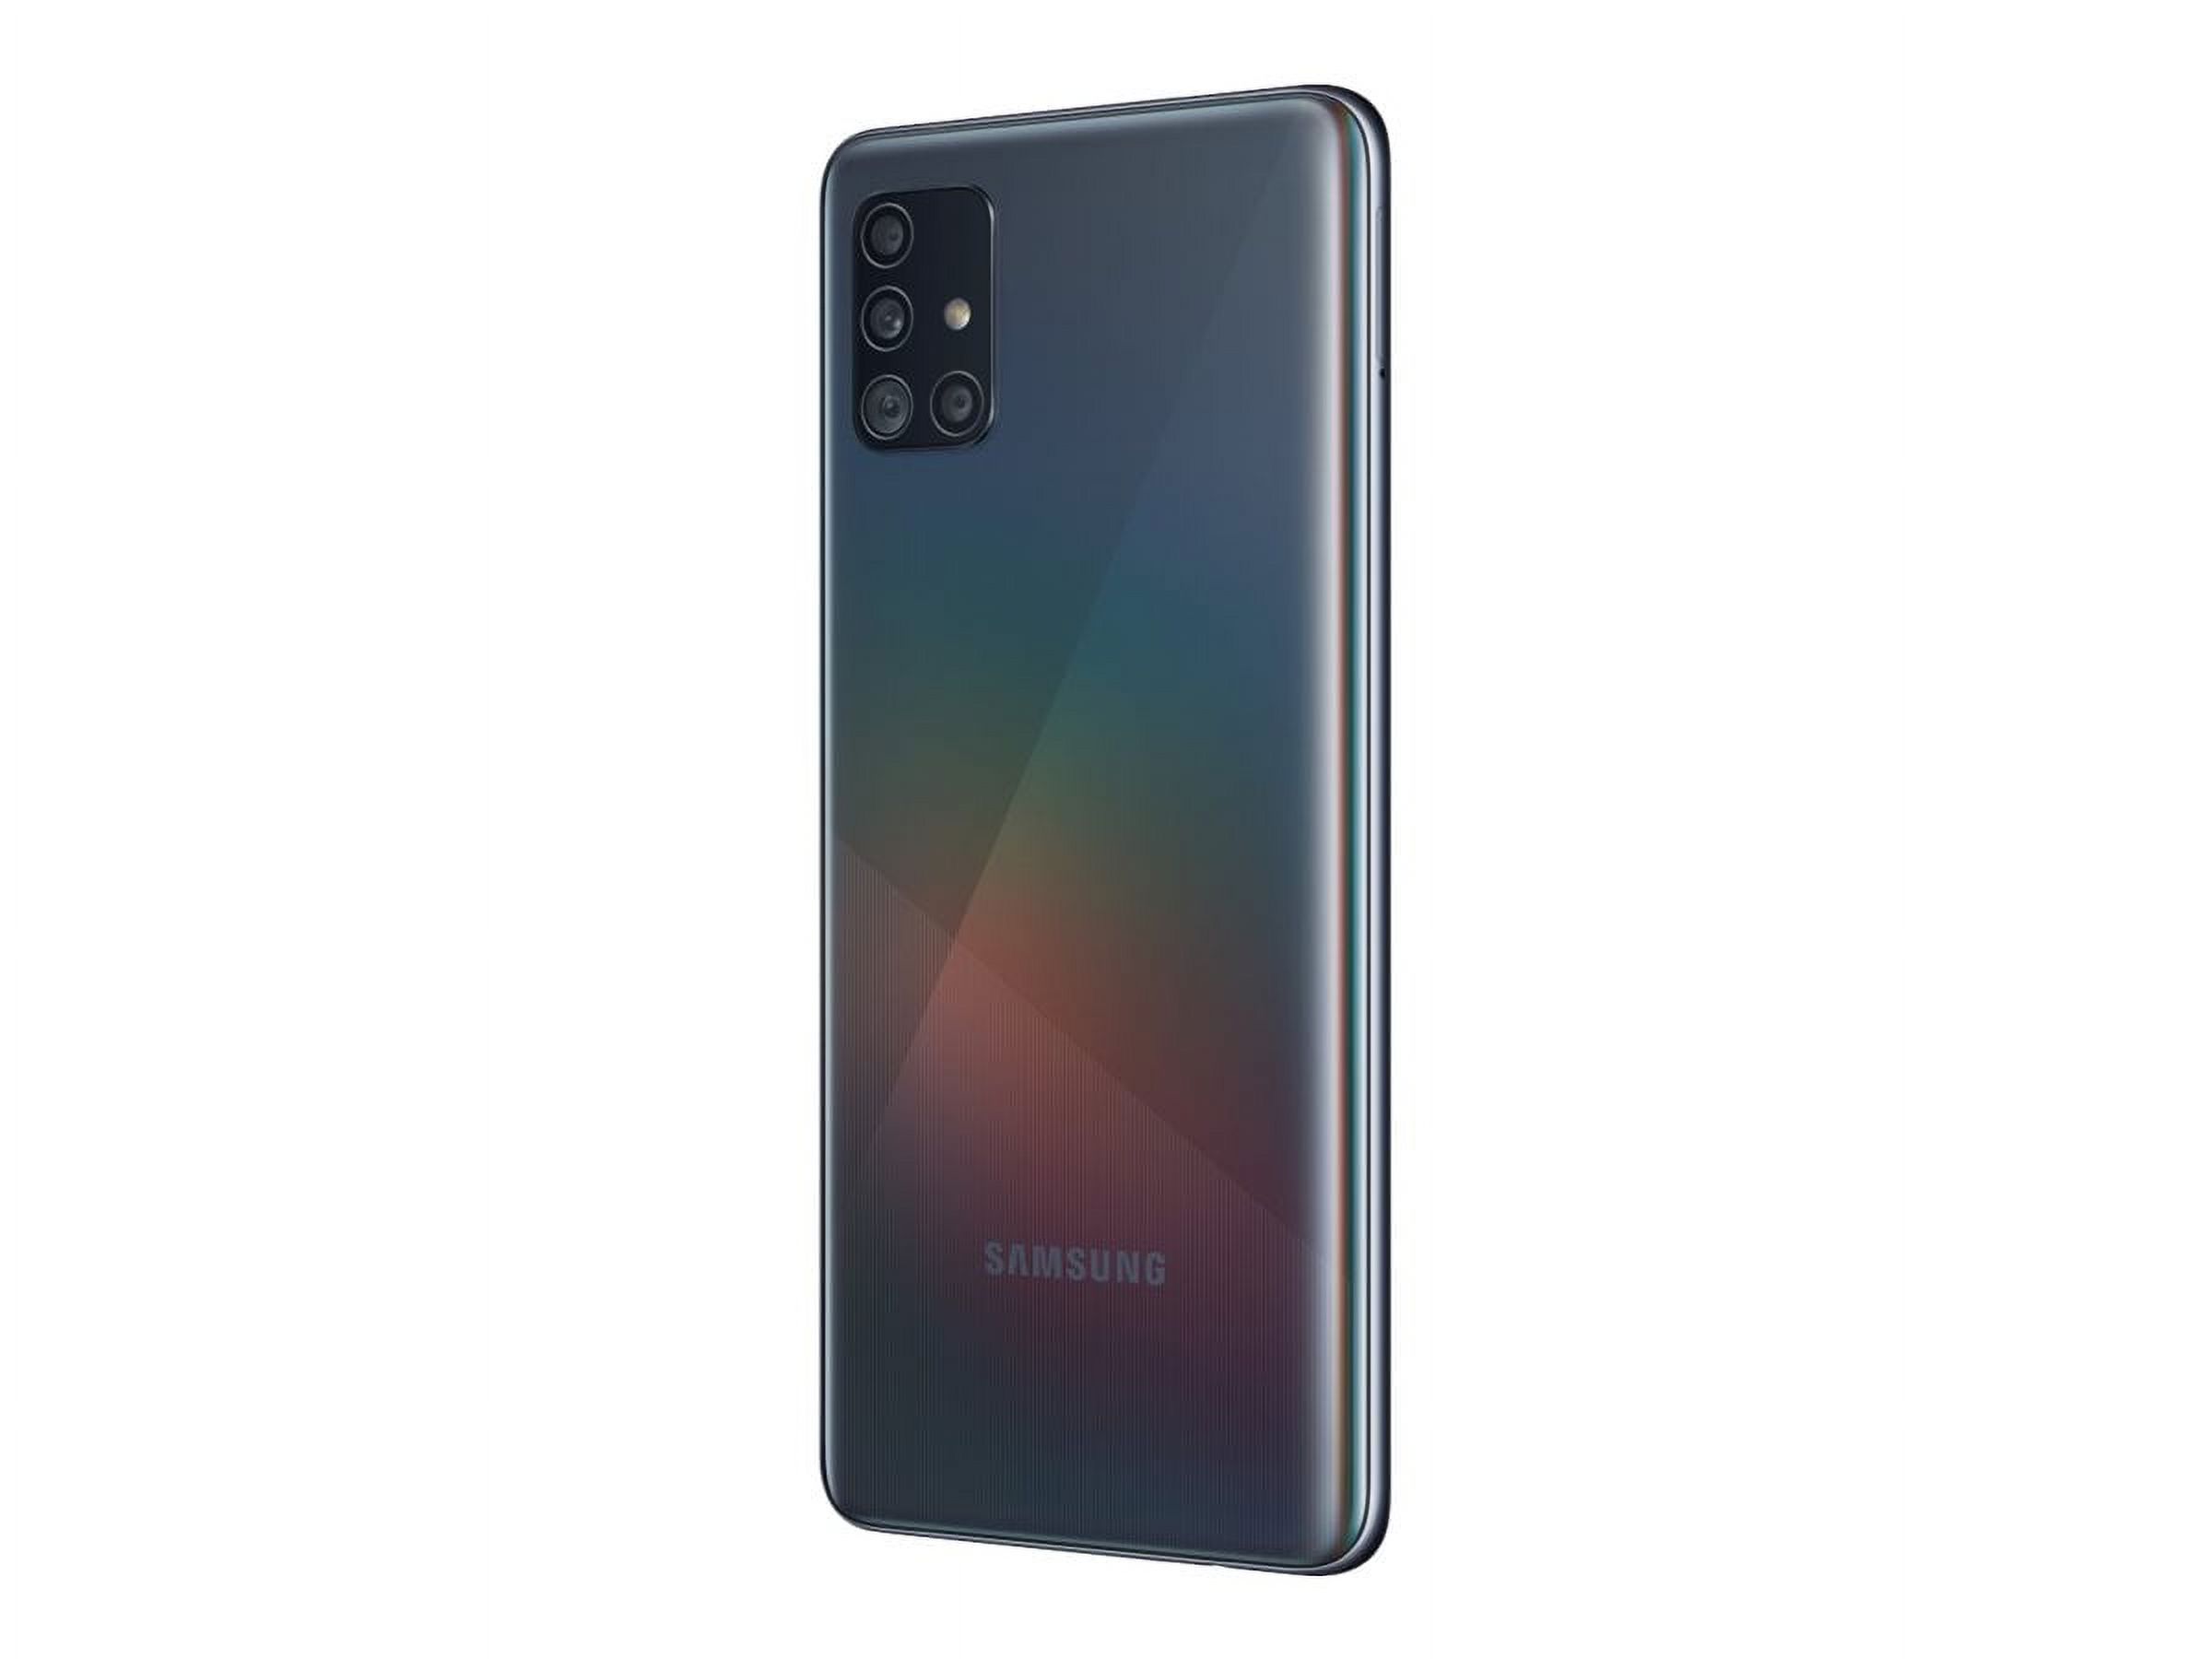 Samsung Galaxy A51 - Smartphone - 4G LTE - 128 GB - microSD slot - 6.5" - 2400 x 1080 pixels - Super AMOLED - RAM 4 GB (32 MP front camera) - 4x rear cameras - Android - Sprint - Prism crush black - image 5 of 7